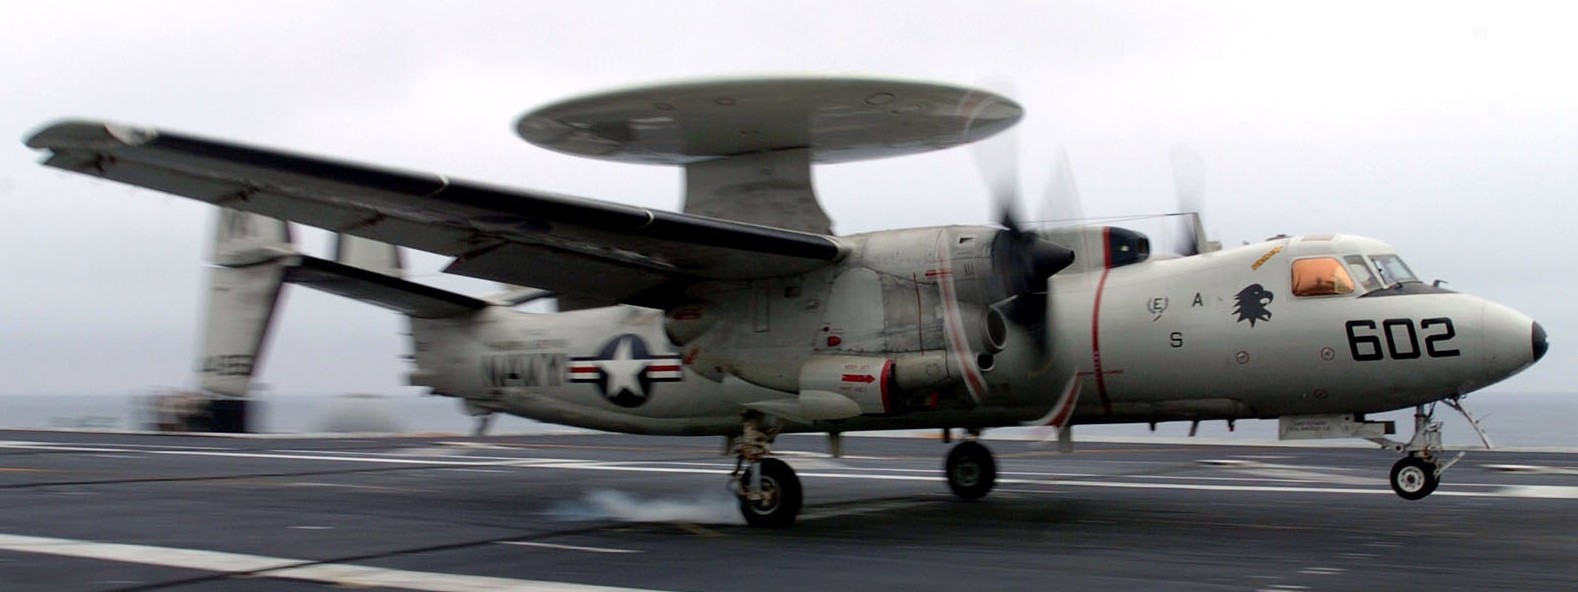 vaw-113 black eagles carrier airborne early warning squadron us navy grumman e-2c hawkeye cvw-14 uss john c. stennis cvn-74 91